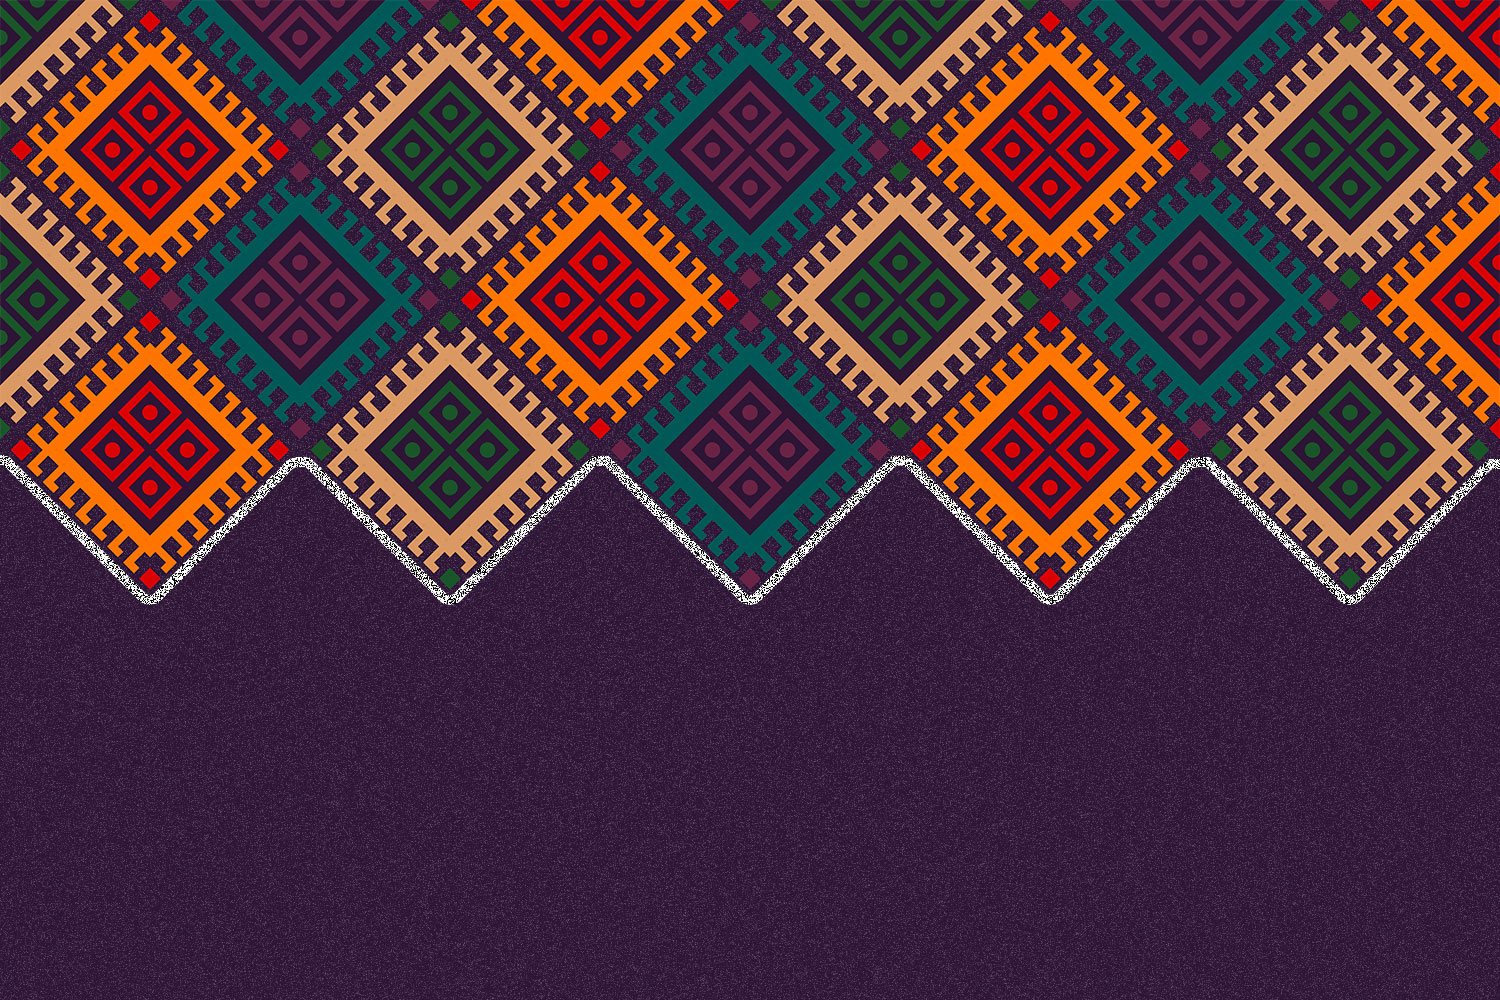 Multicolored pattern on a dark purple background.